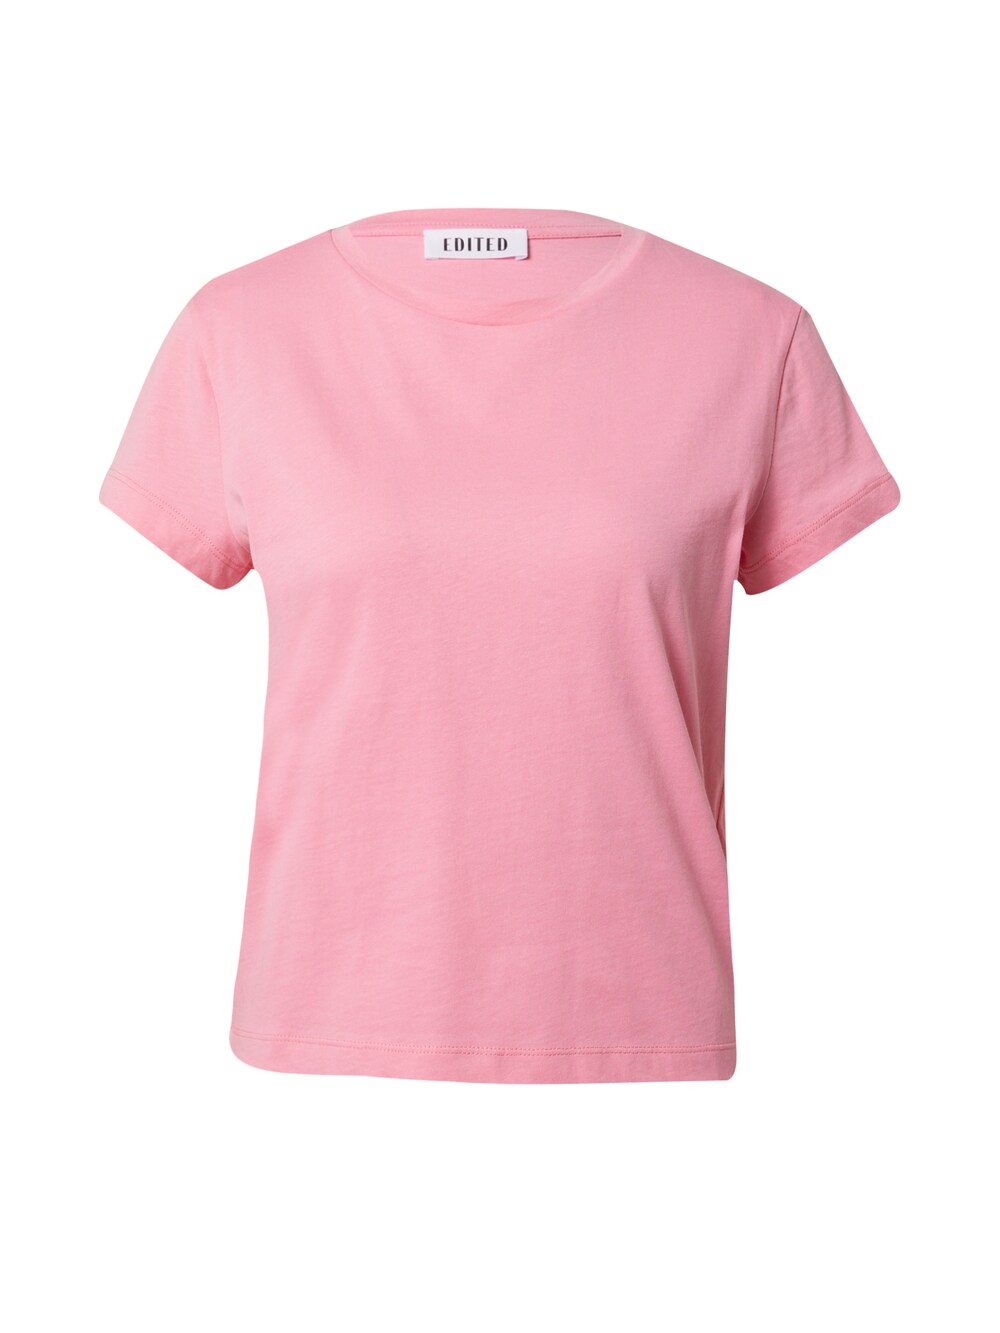 Рубашка EDITED Ester, розовый